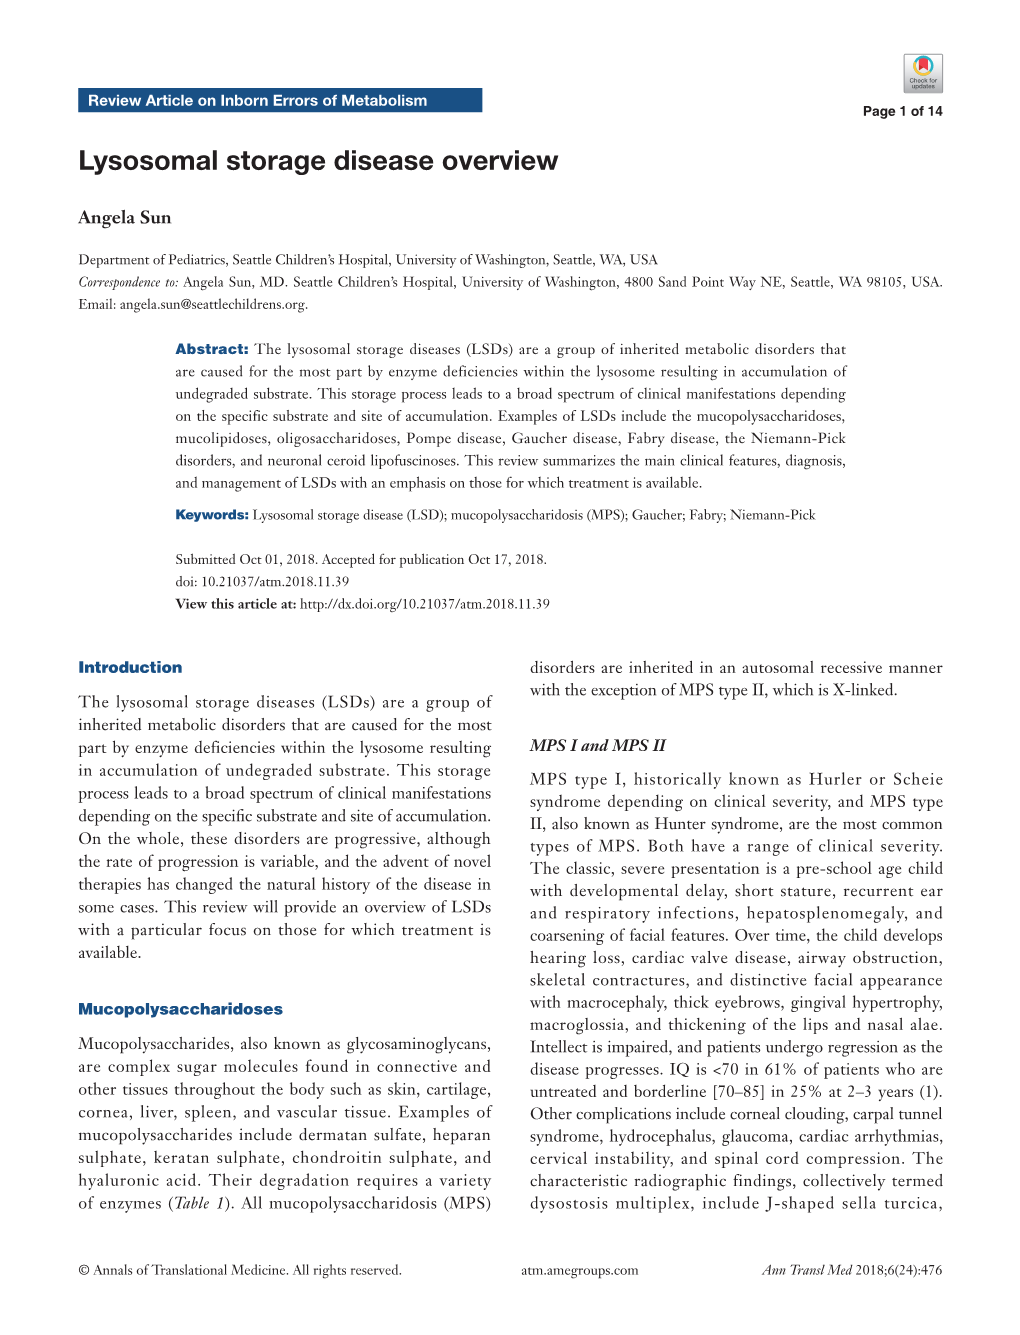 Lysosomal Storage Disease Overview